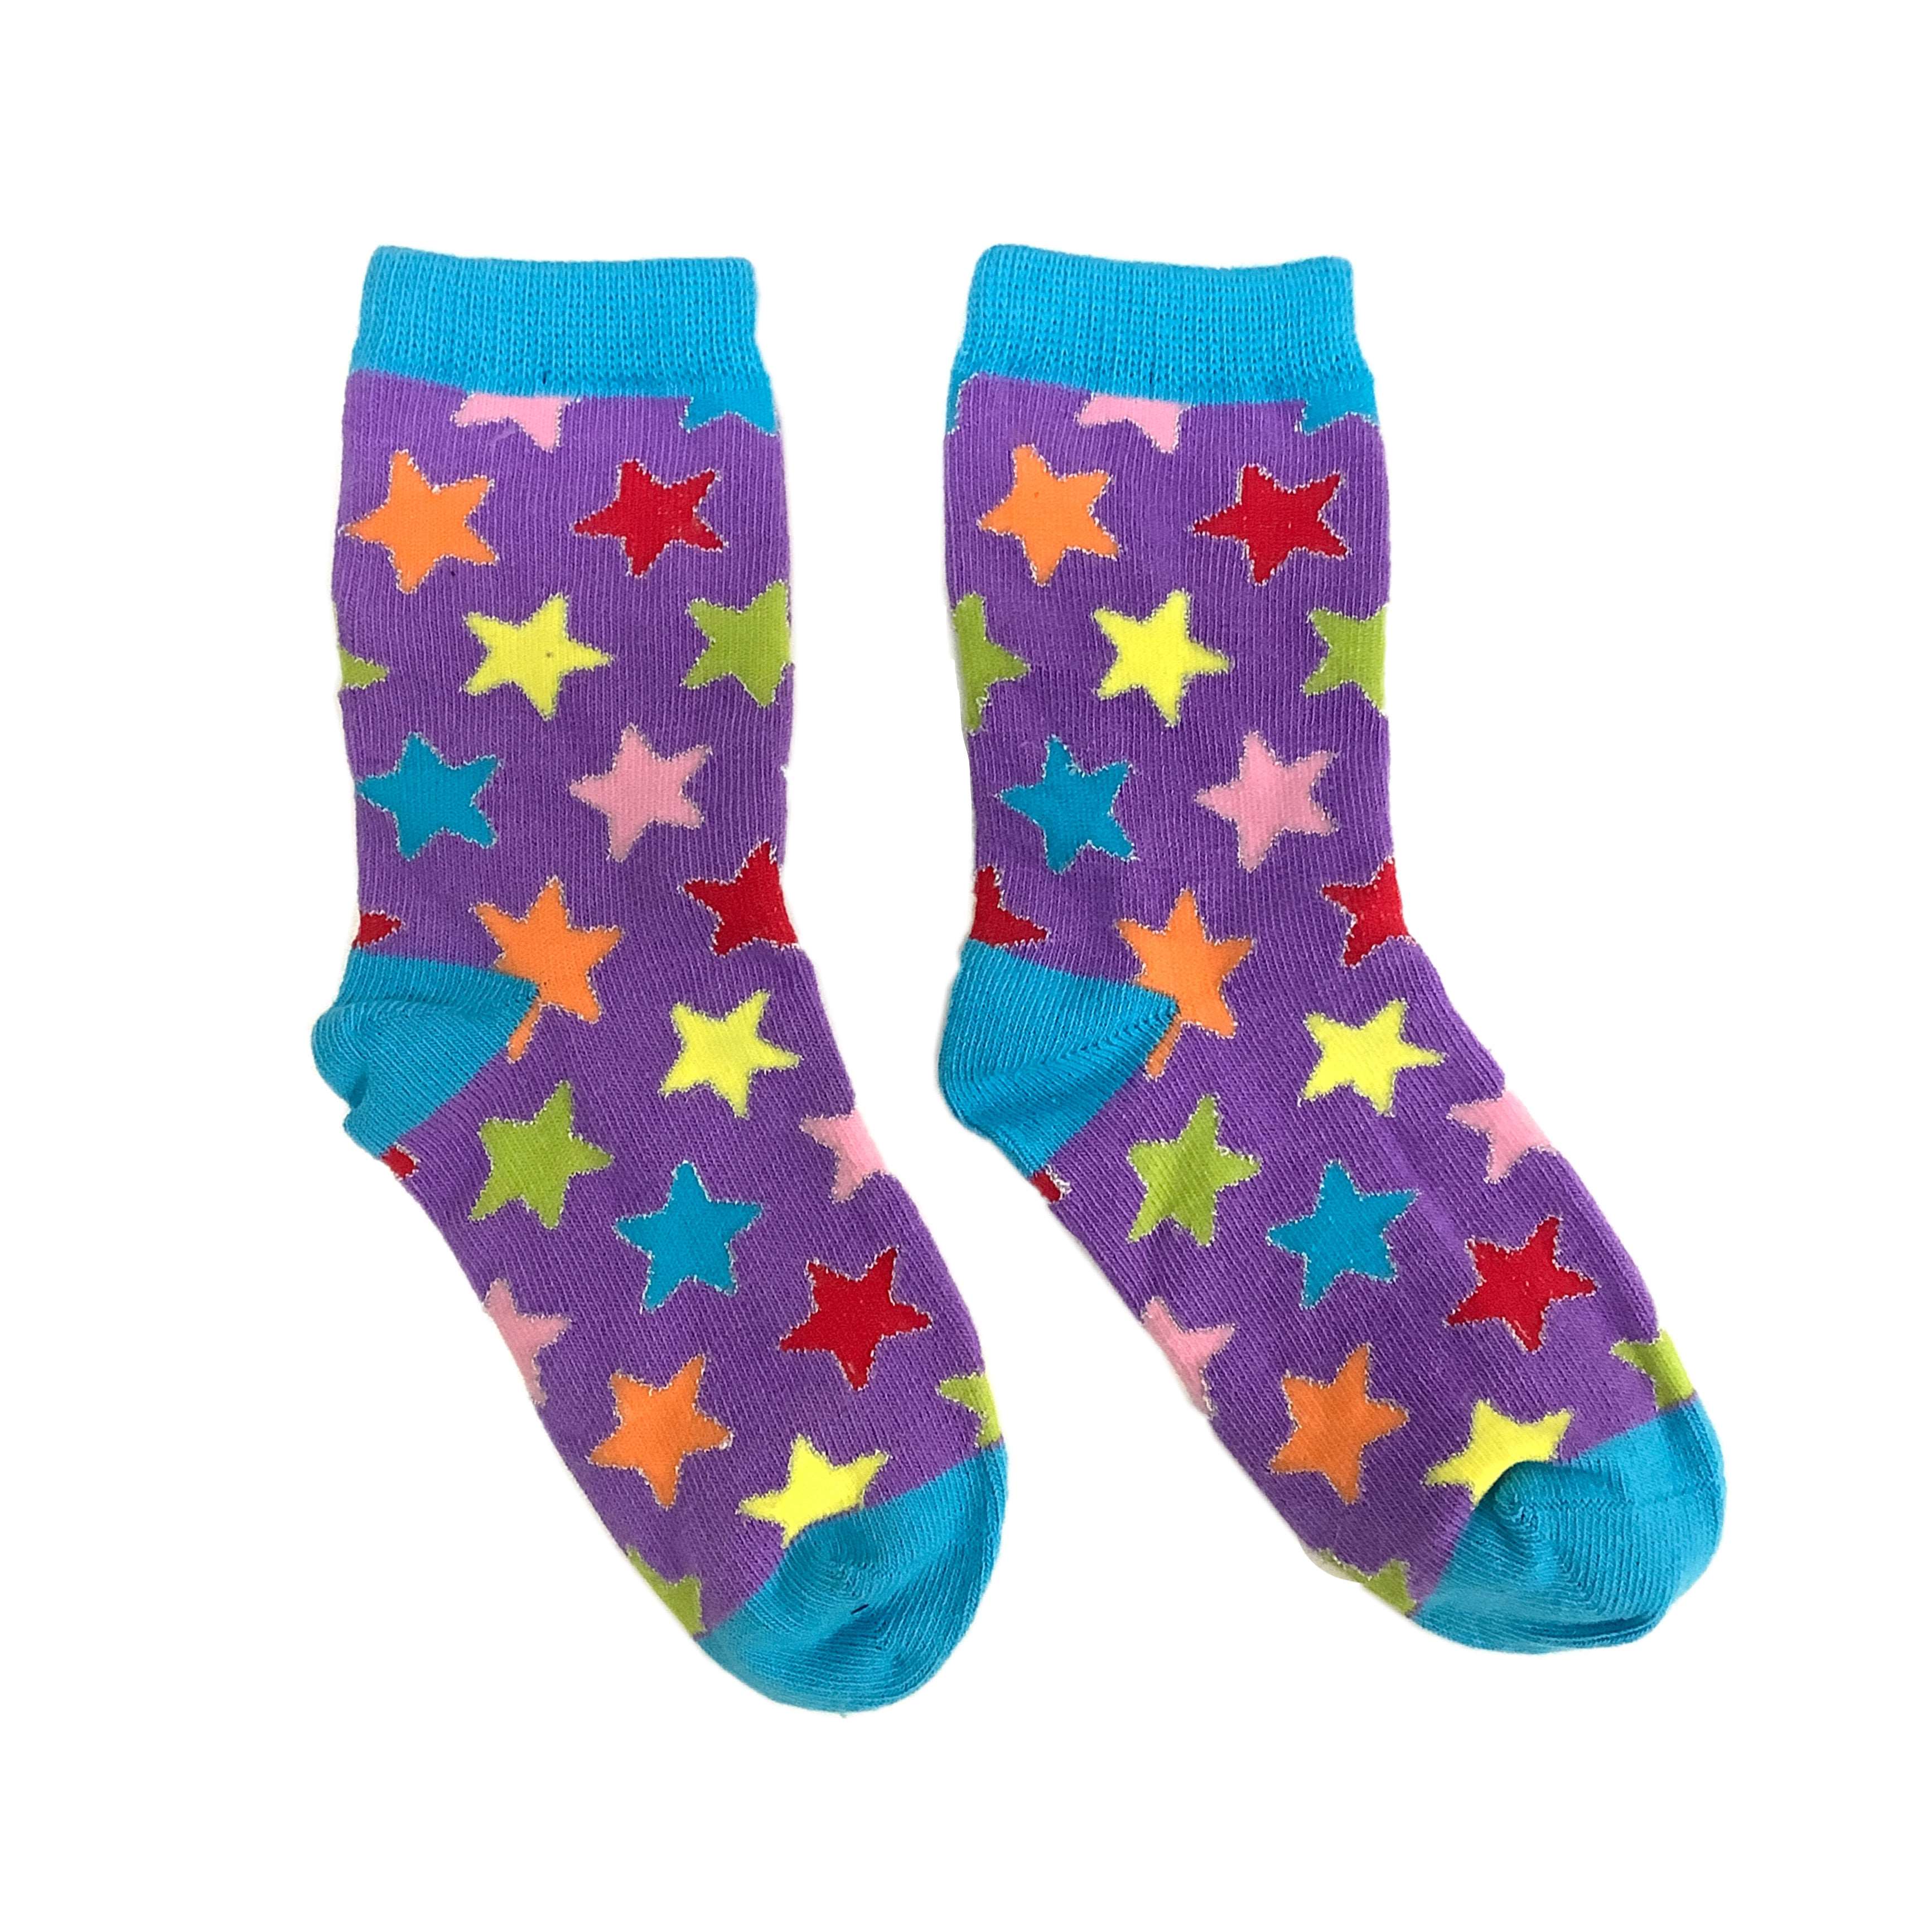 Colorful Stars Kids Socks (Ages 0-7)